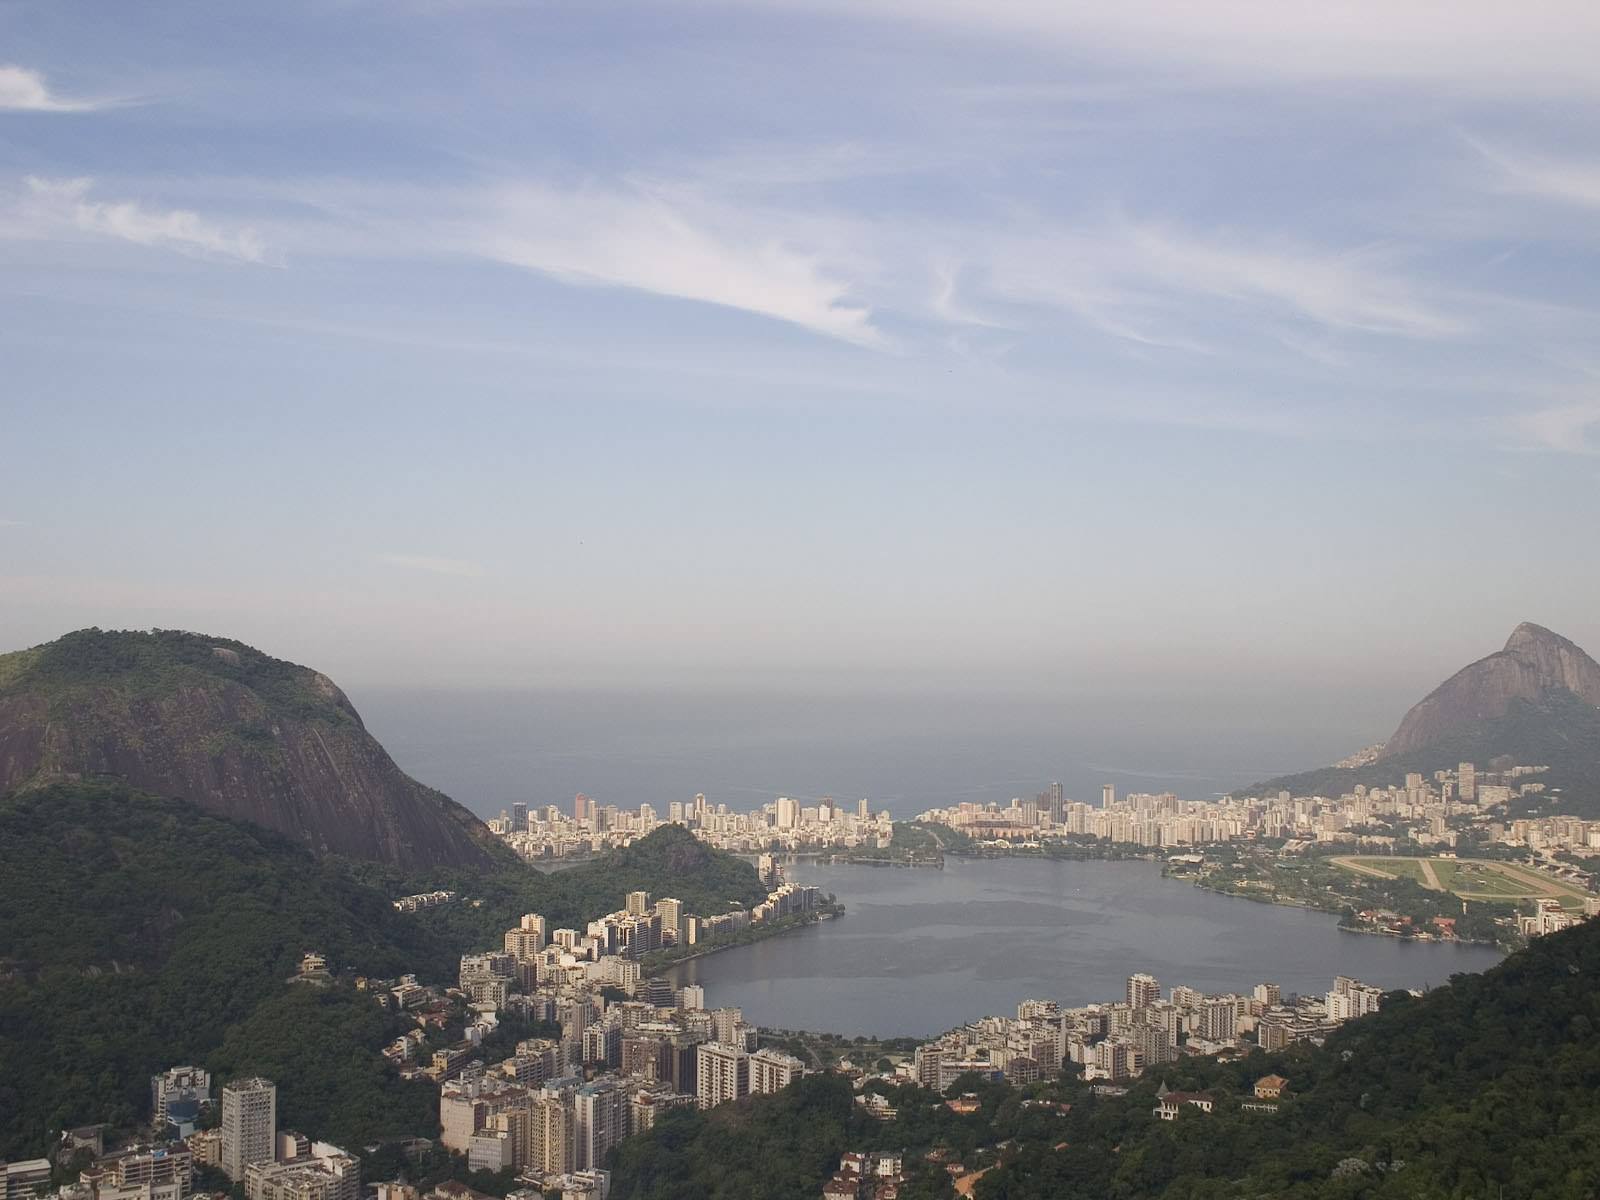 Bresil Brazil View of Lagoon in Rio